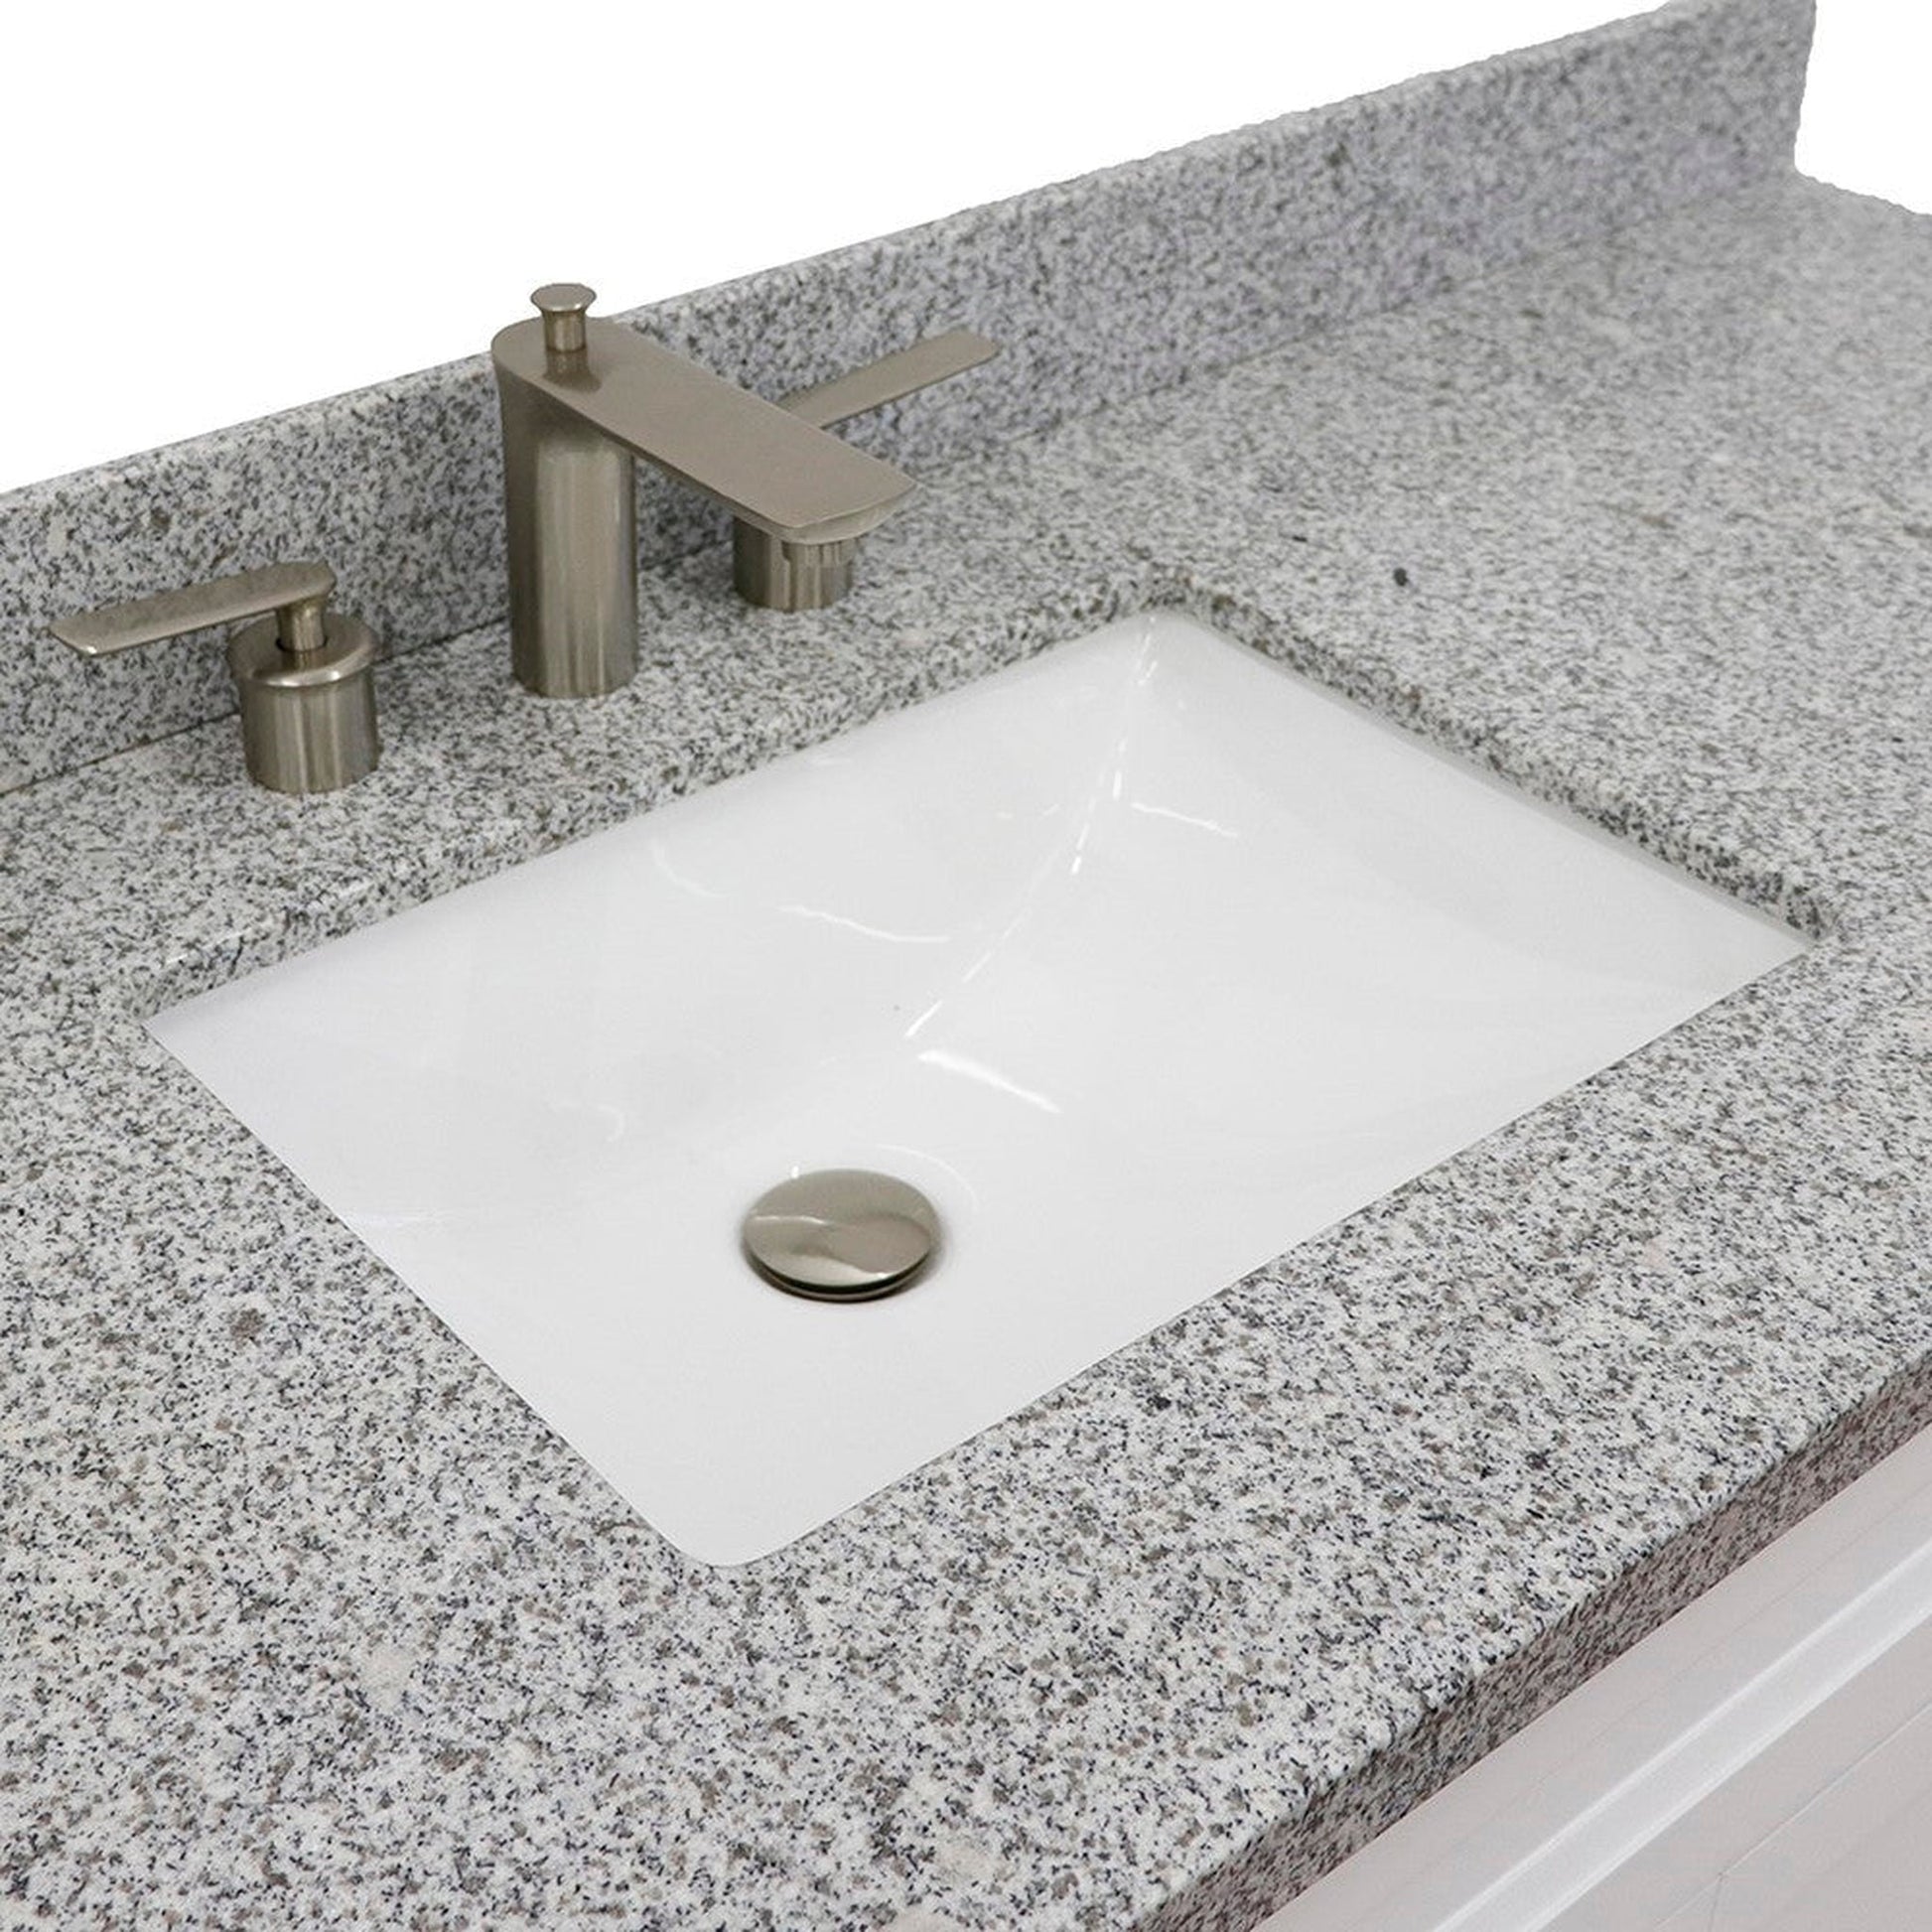 Bellaterra Home Terni 61" 2-Door 6-Drawer White Freestanding Vanity Set With Ceramic Undermount Rectangular Sink And Gray Granite Top